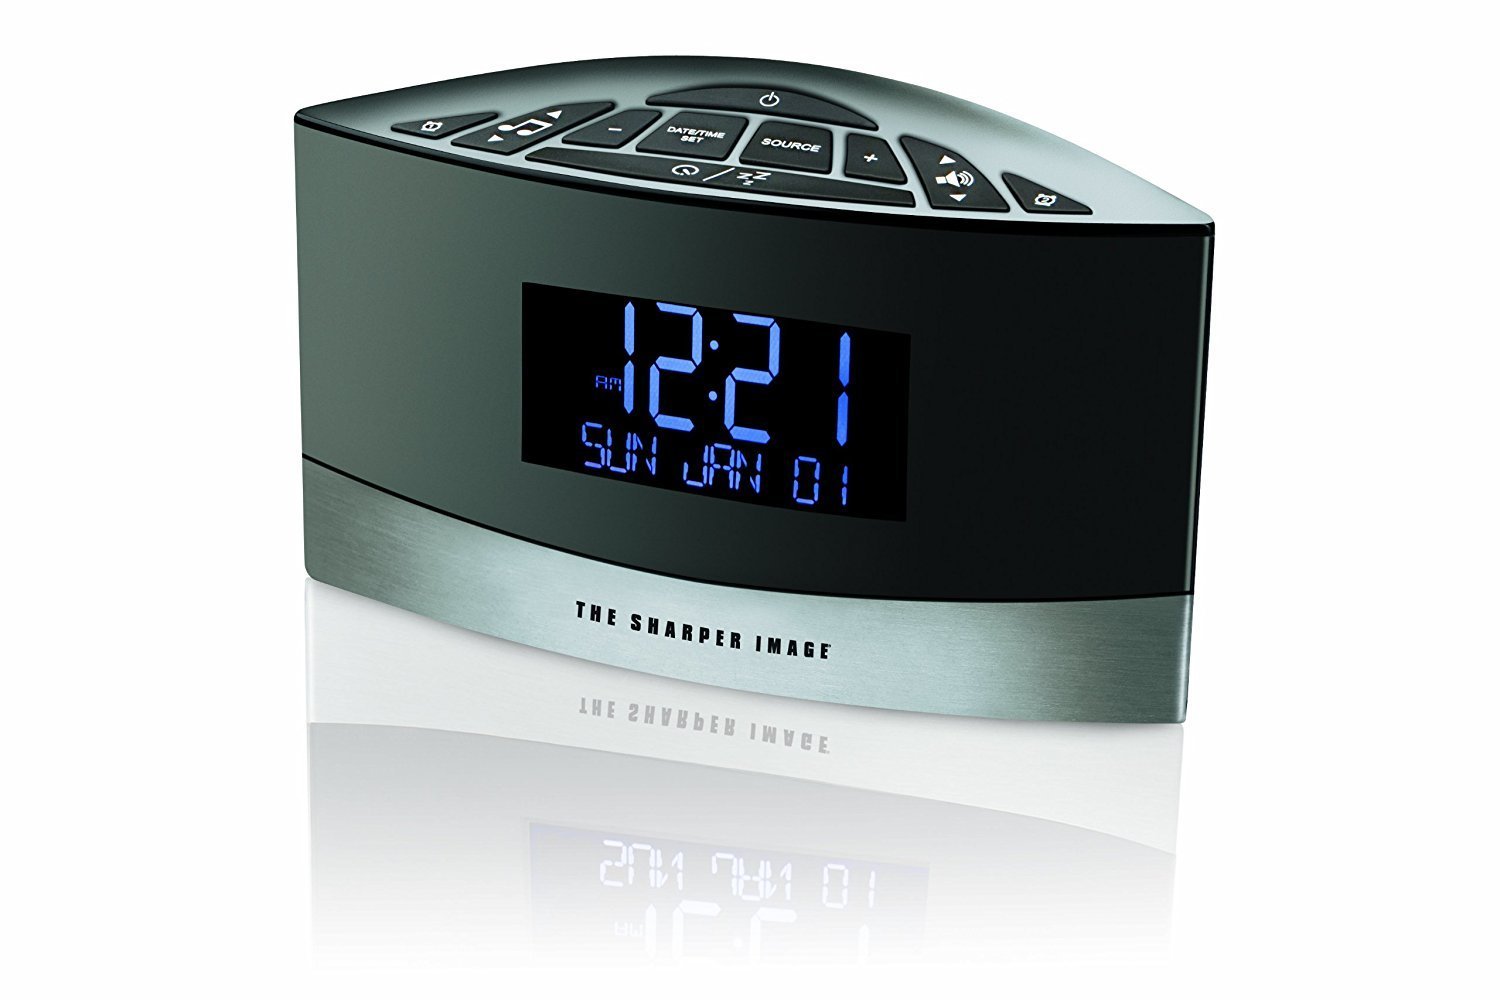 homedics clock radio sound machine